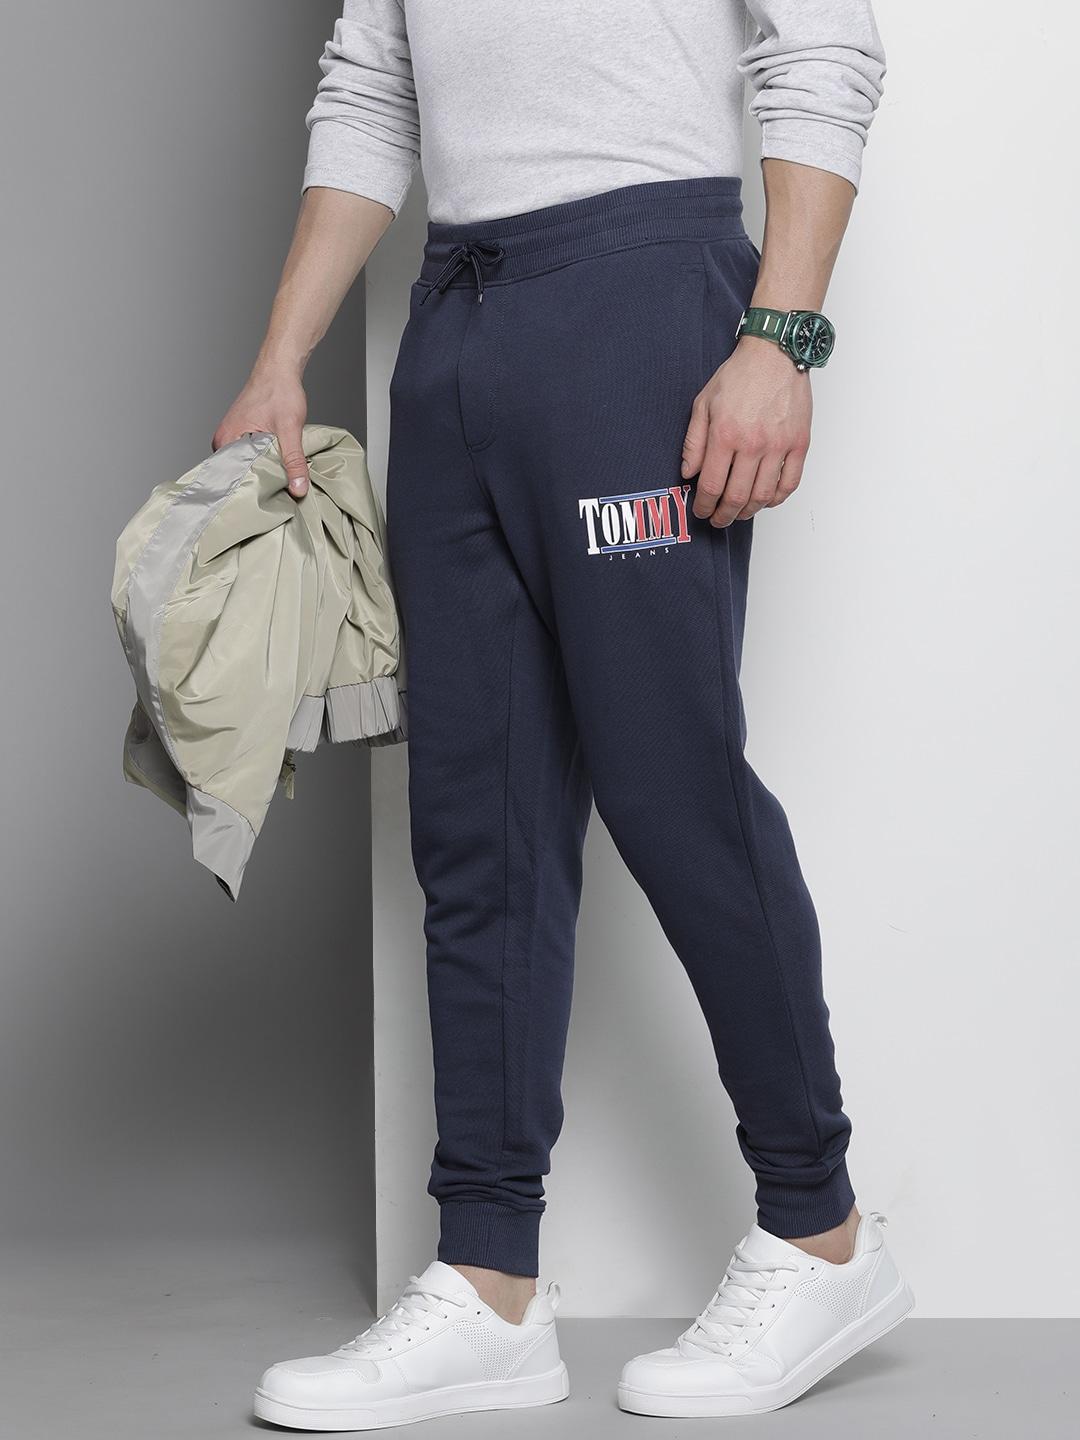 Tommy Hilfiger Men Navy Blue Slim Fit Joggers Trousers